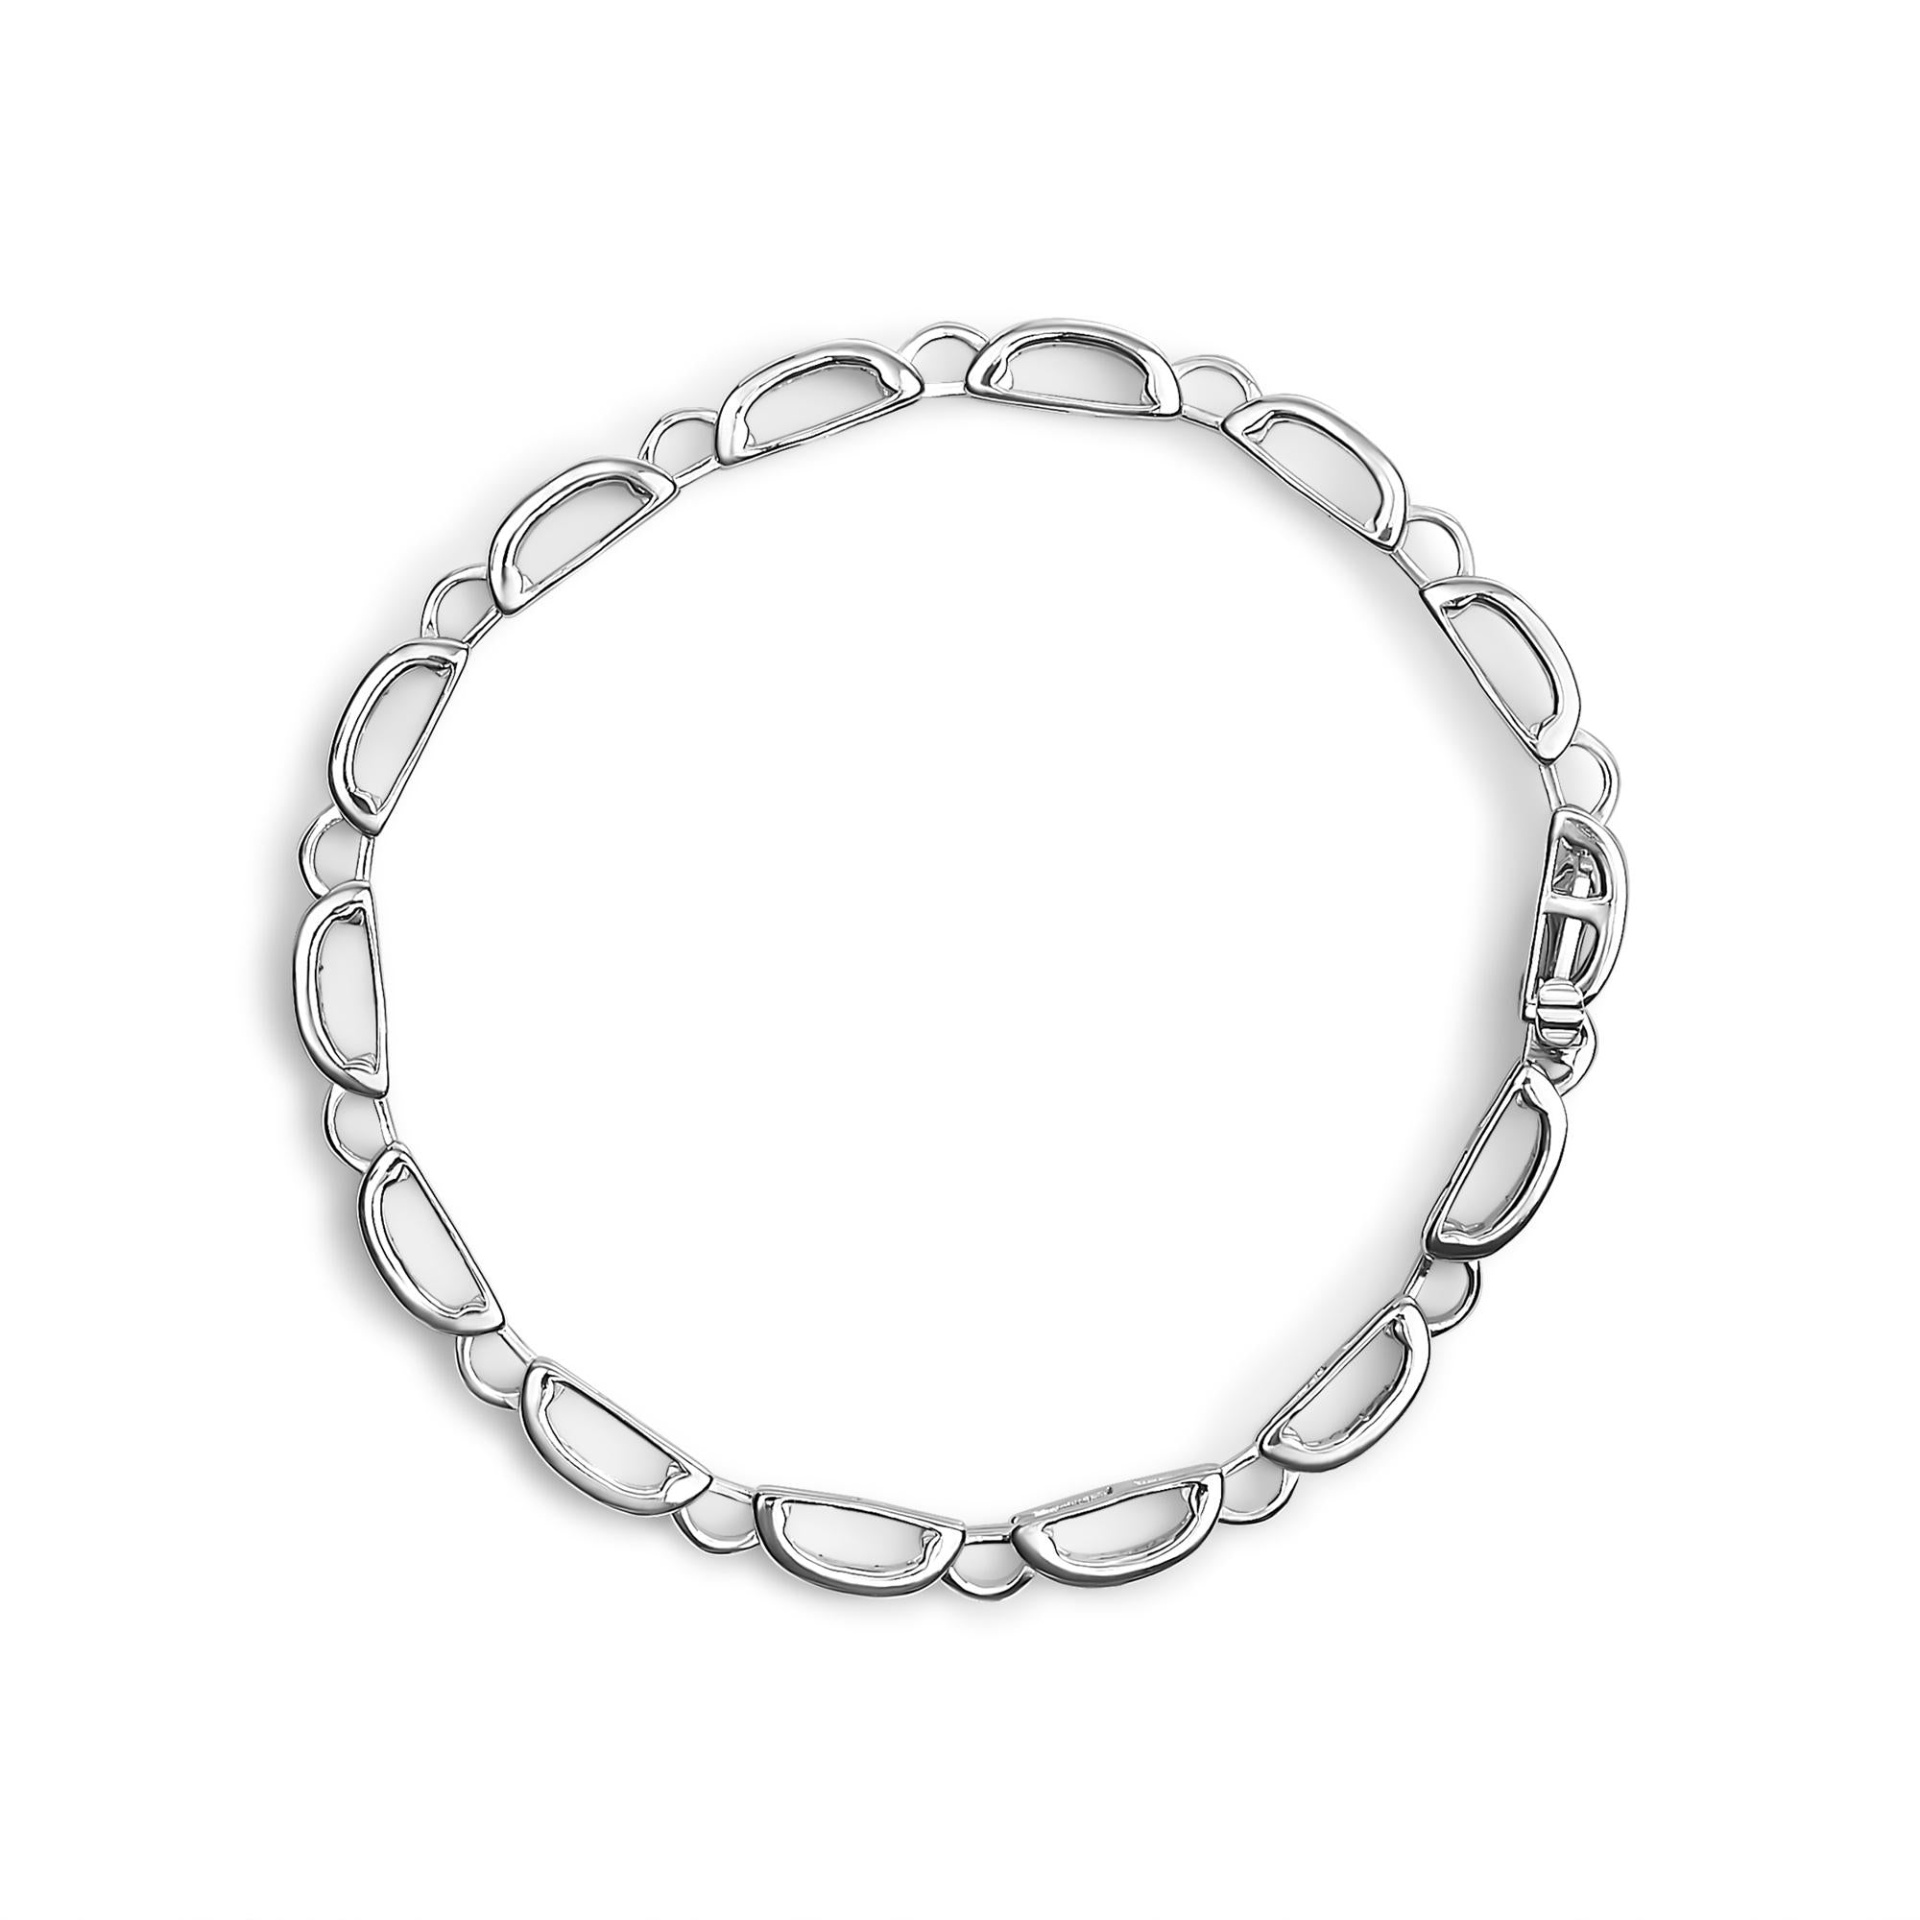 14K White Gold 1.00 Cttw Princess-Cut Diamond Link Bracelet (I-J Color, I1-I2 Clarity) - Size 7.25, Goodies N Stuff